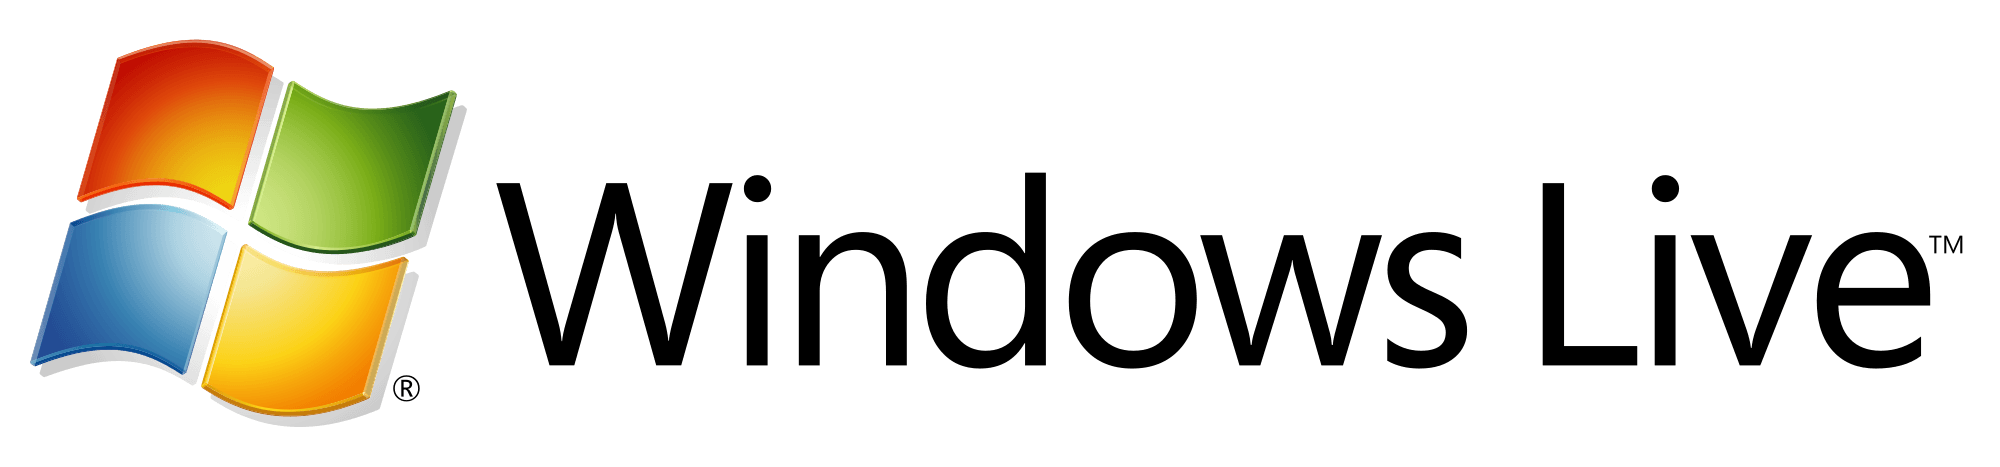 Windows Live Logo - Windows Live Logo.png